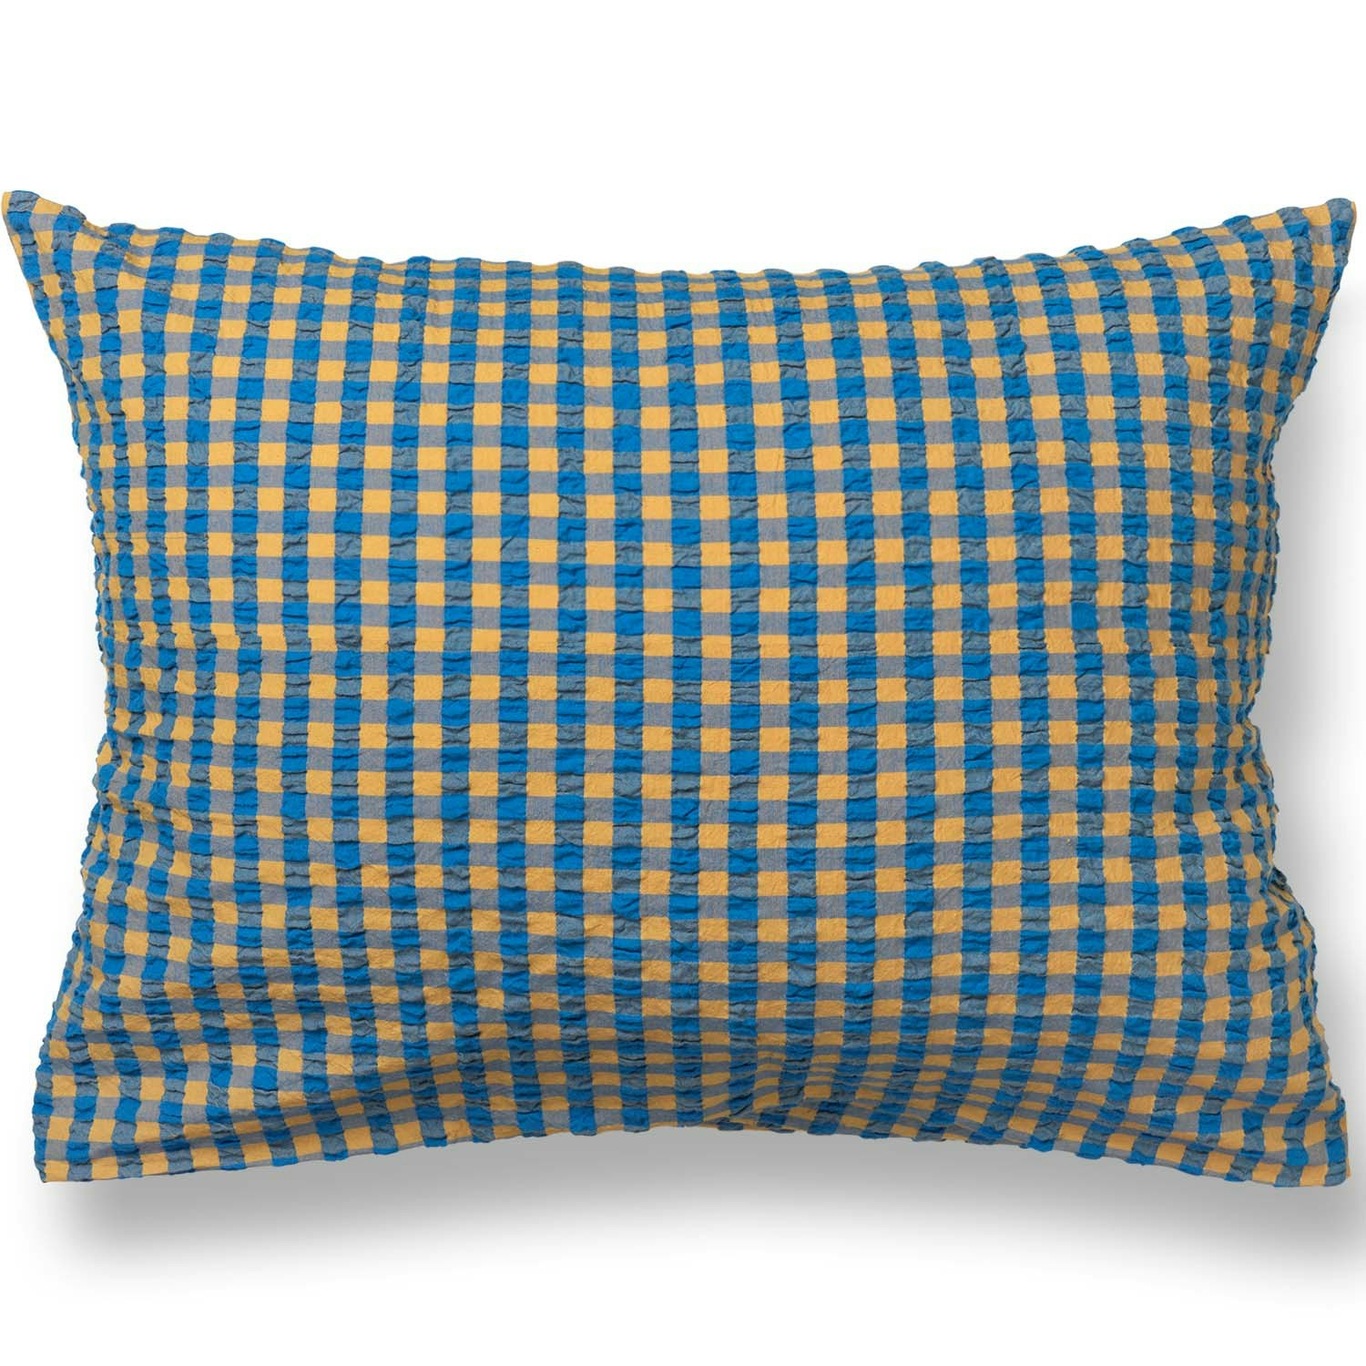 Bæk & Bølge Pillowcase 50x70 cm, Blue/Ochre